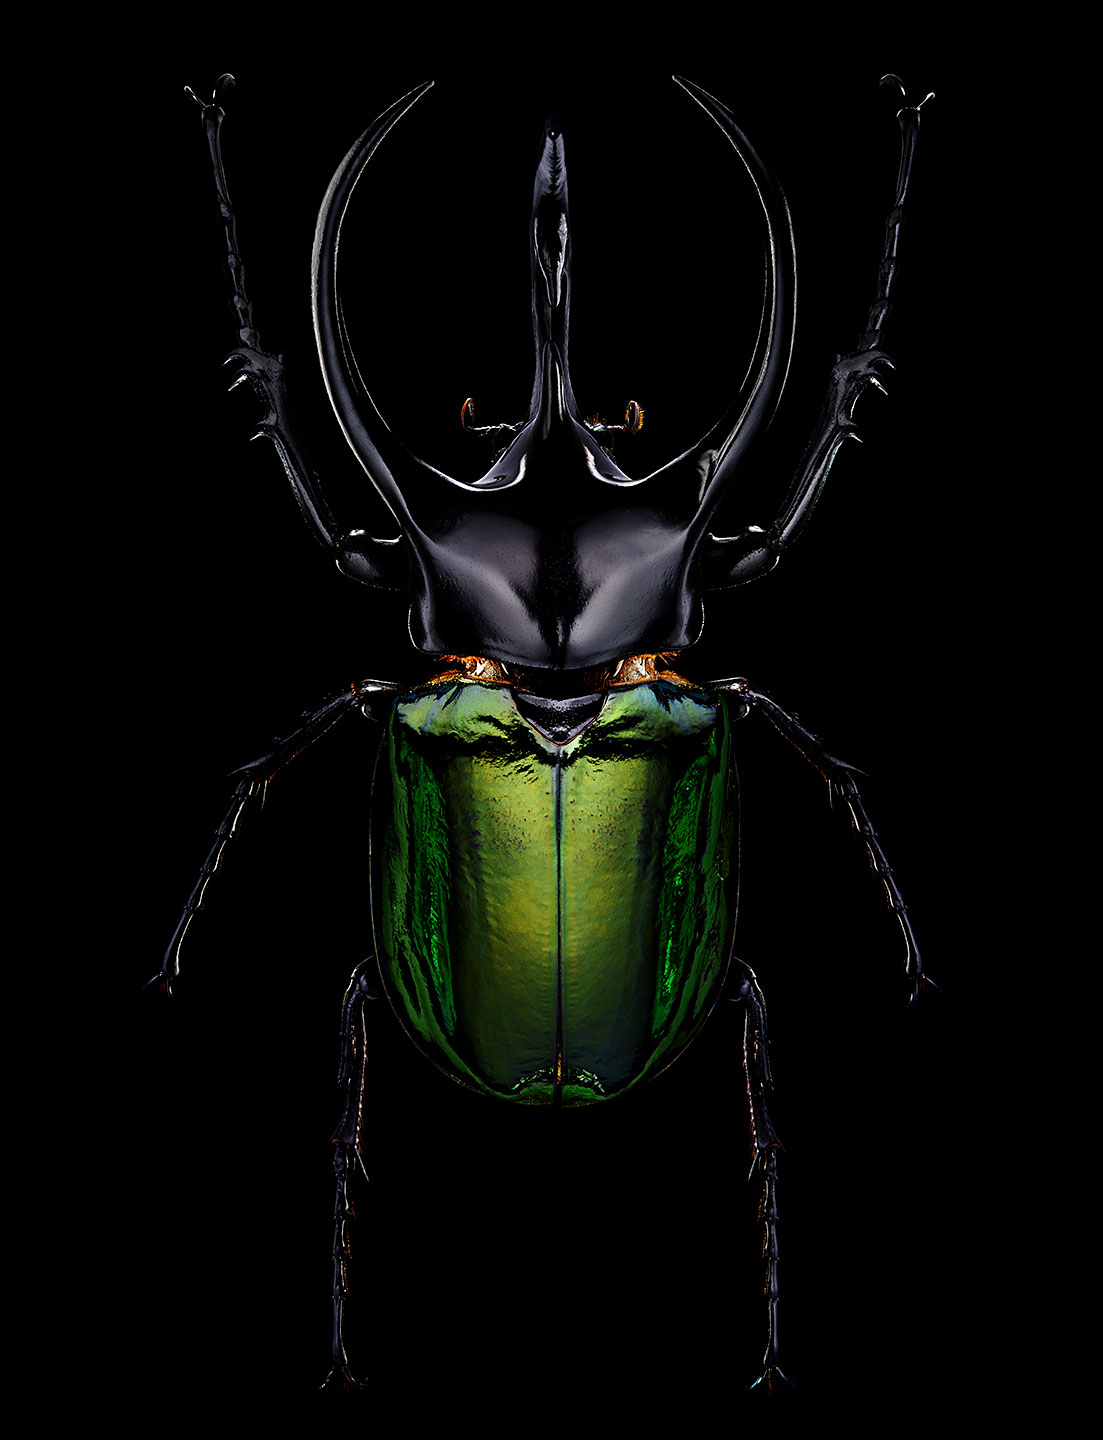 <a href="//mrsteel.london/shop/atlas-beetle/">REVEAL DETAILS / BUY</a>